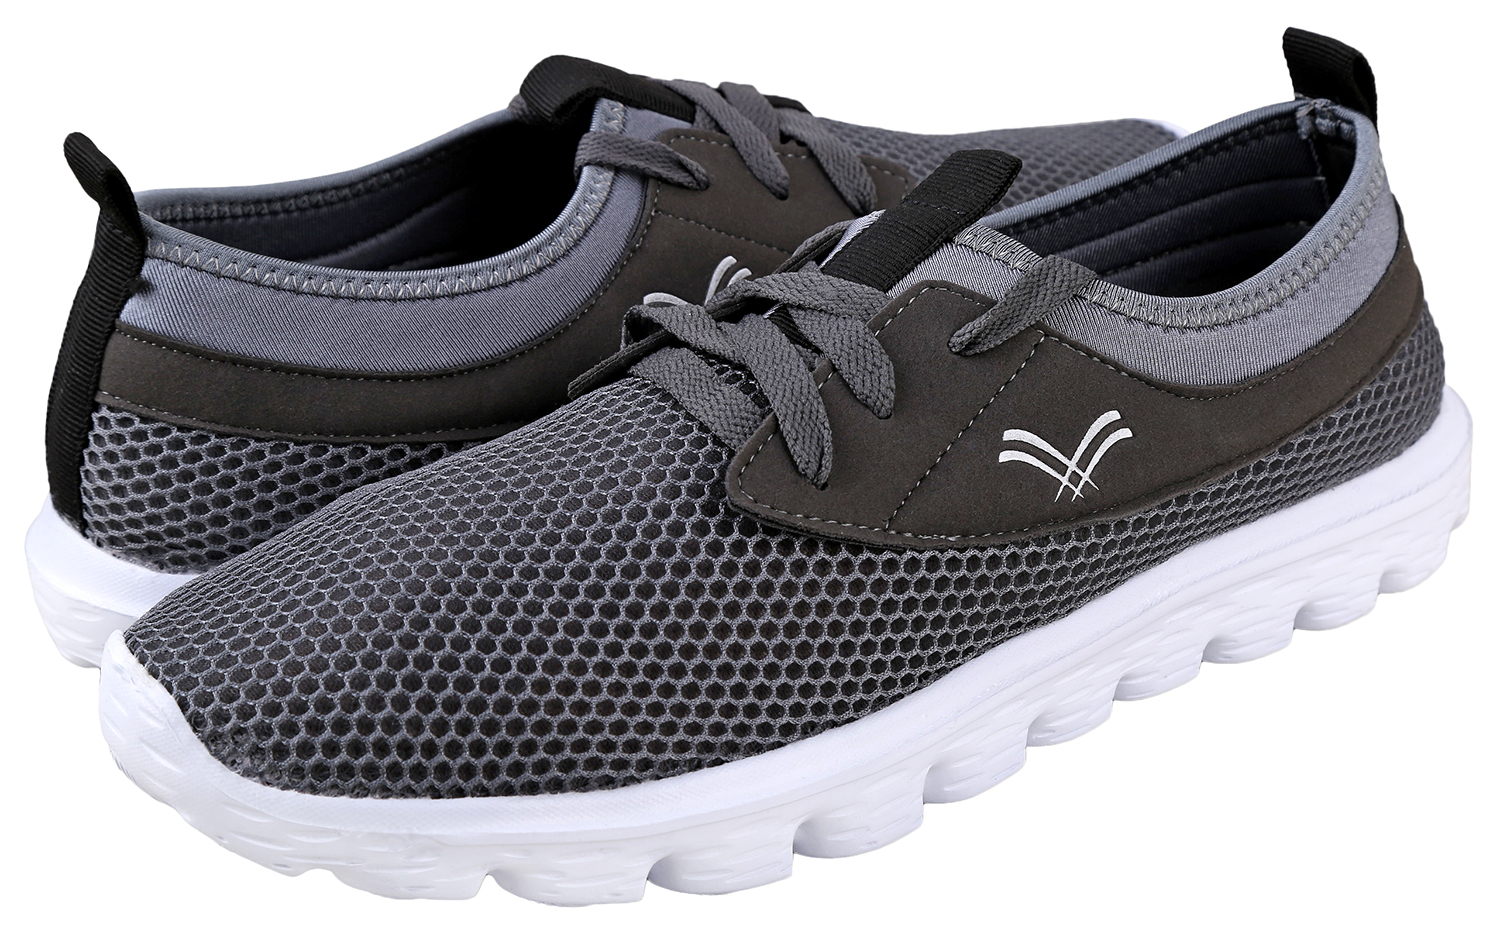 Urban Fox Men's Breeze Lightweight Shoes | Lightweight Shoes for Men | Casual Shoes | Walking Shoes for Men | Grey/White 8 M US - image 5 of 7